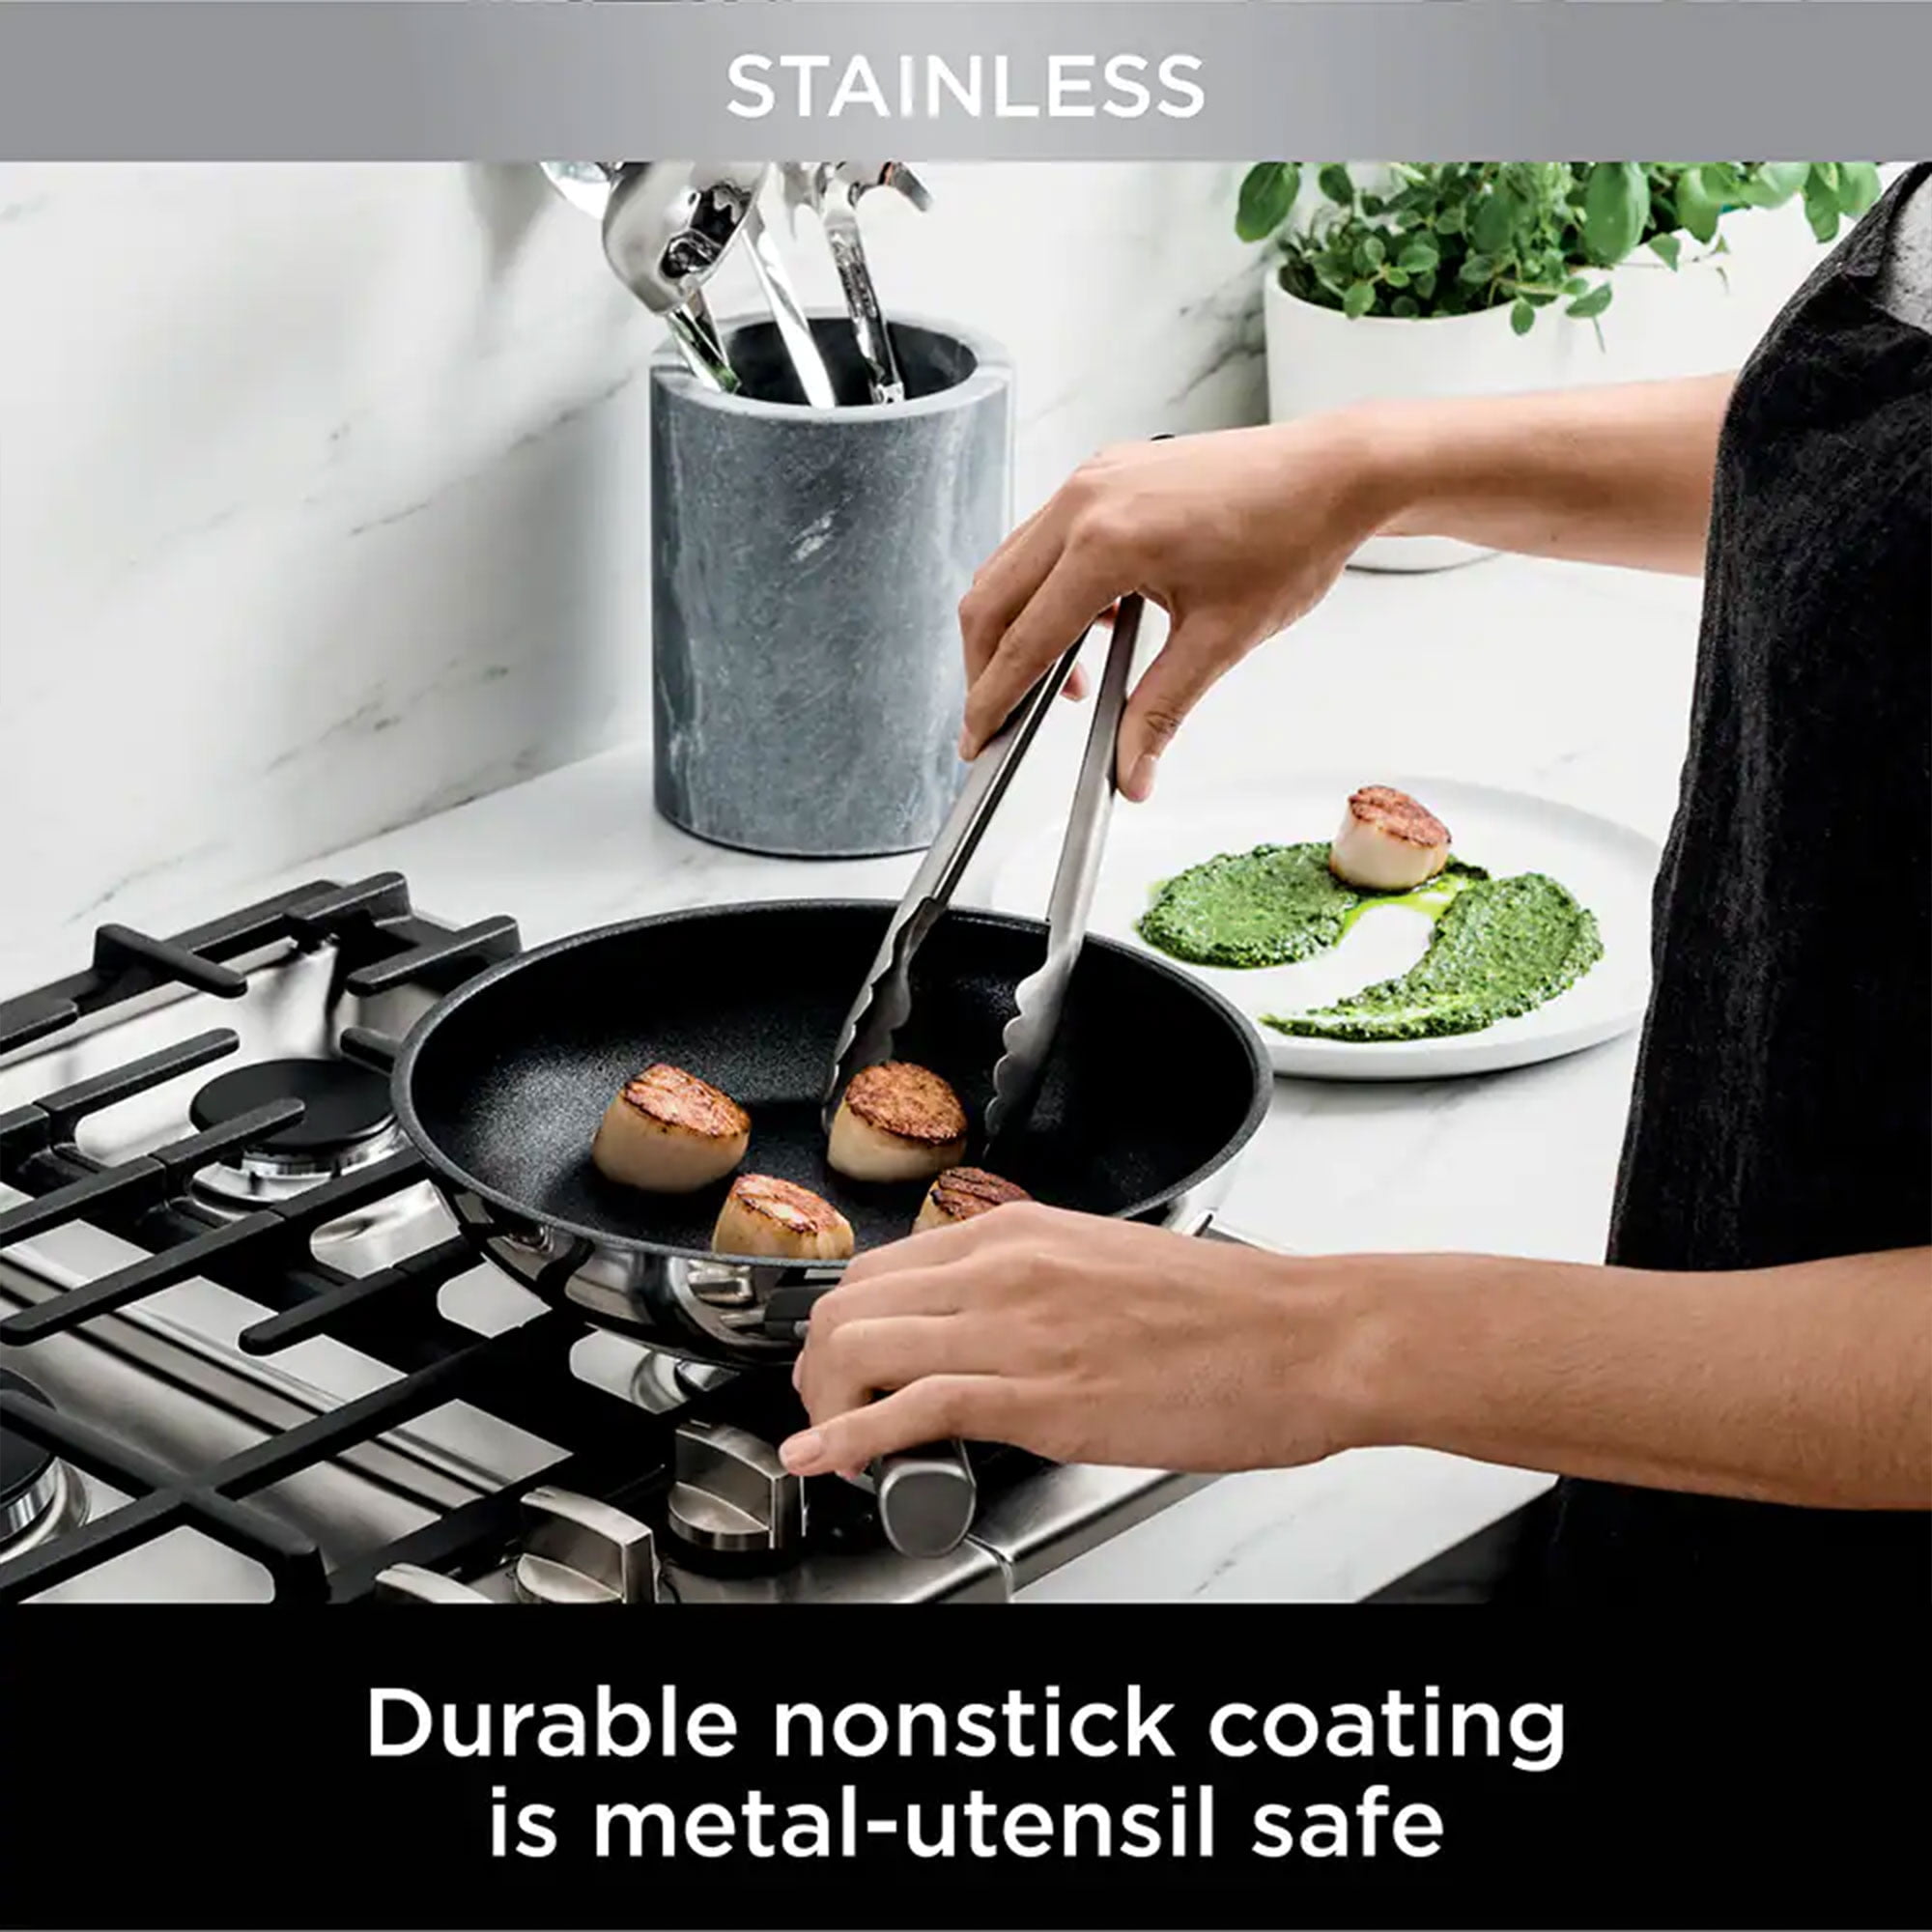 NINJA 8 in. Aluminum Nonstick Oven Safe Frying Pan, Red C20020 - The Home  Depot